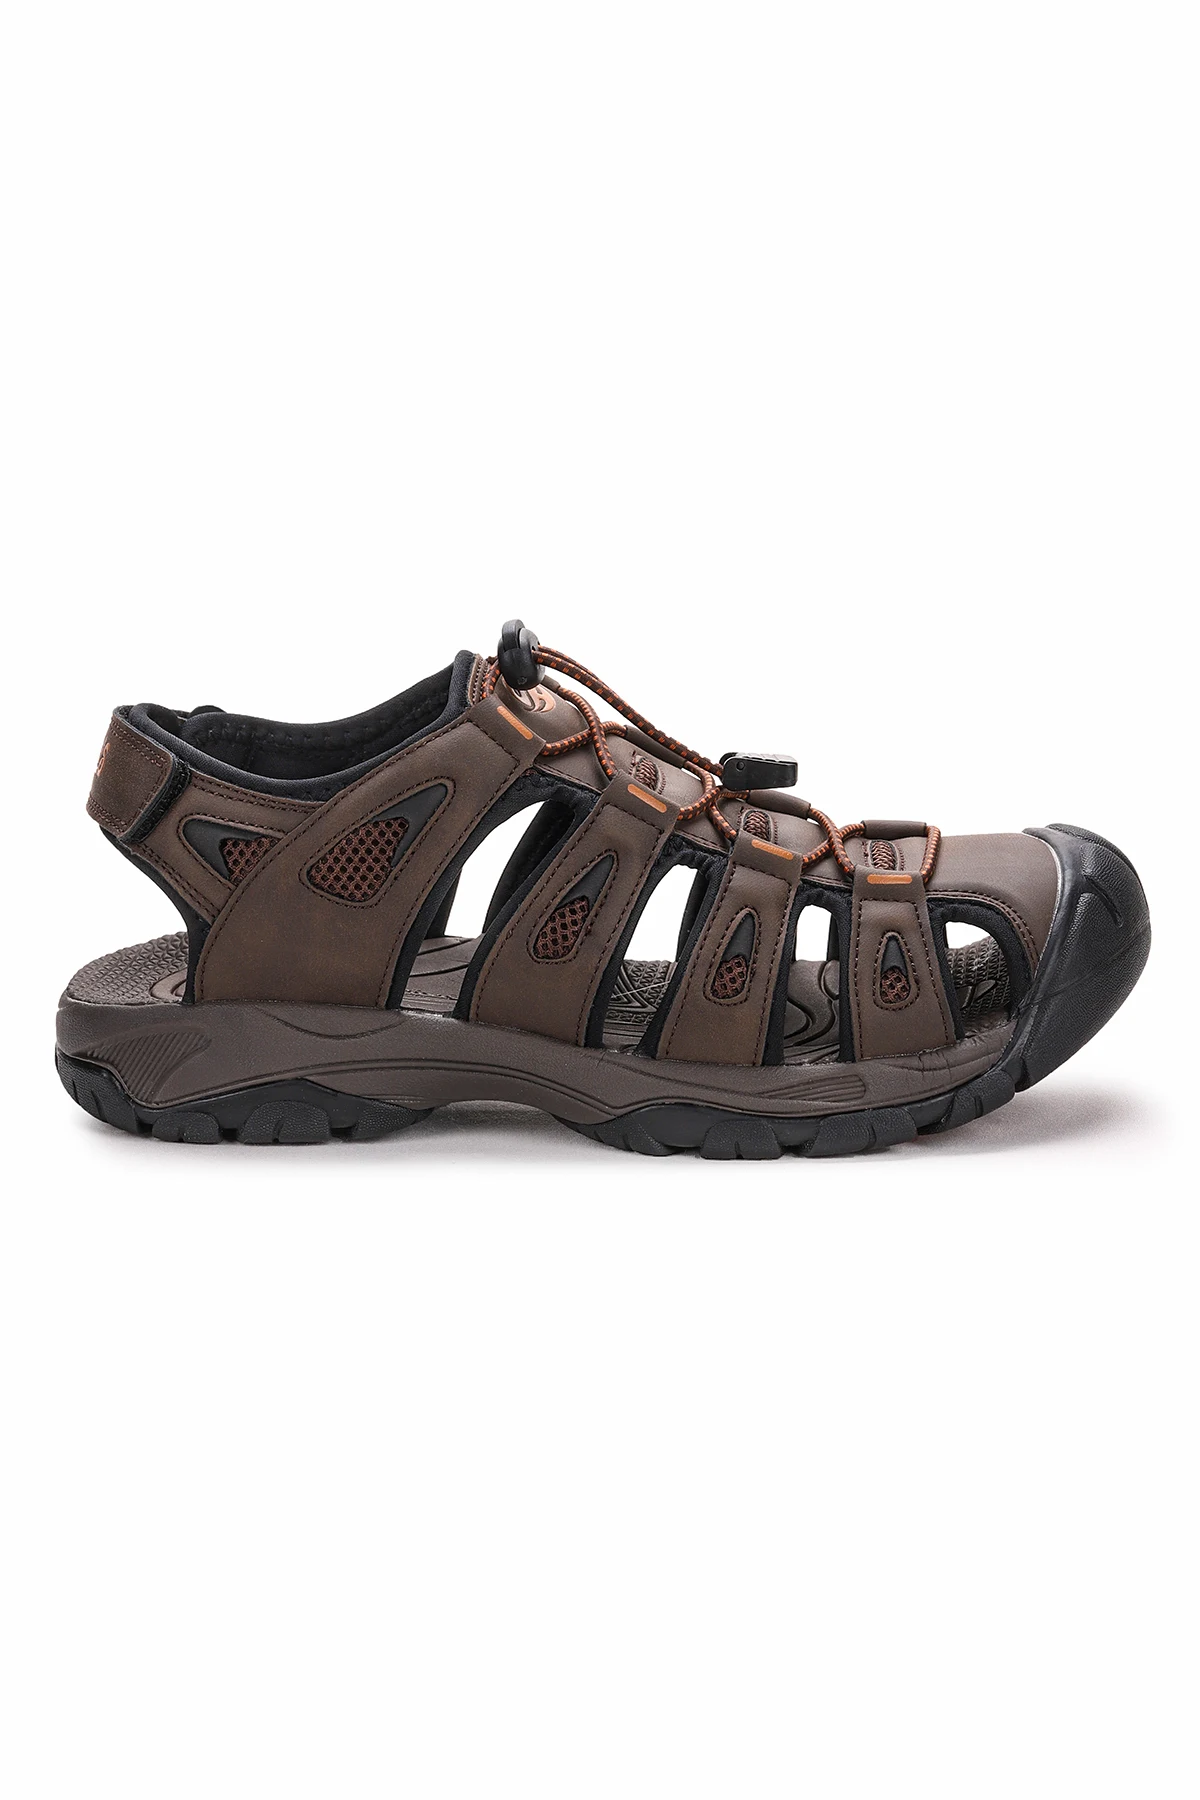 

Dockers 234715 Casual Velcro Men's Sandals Shoes